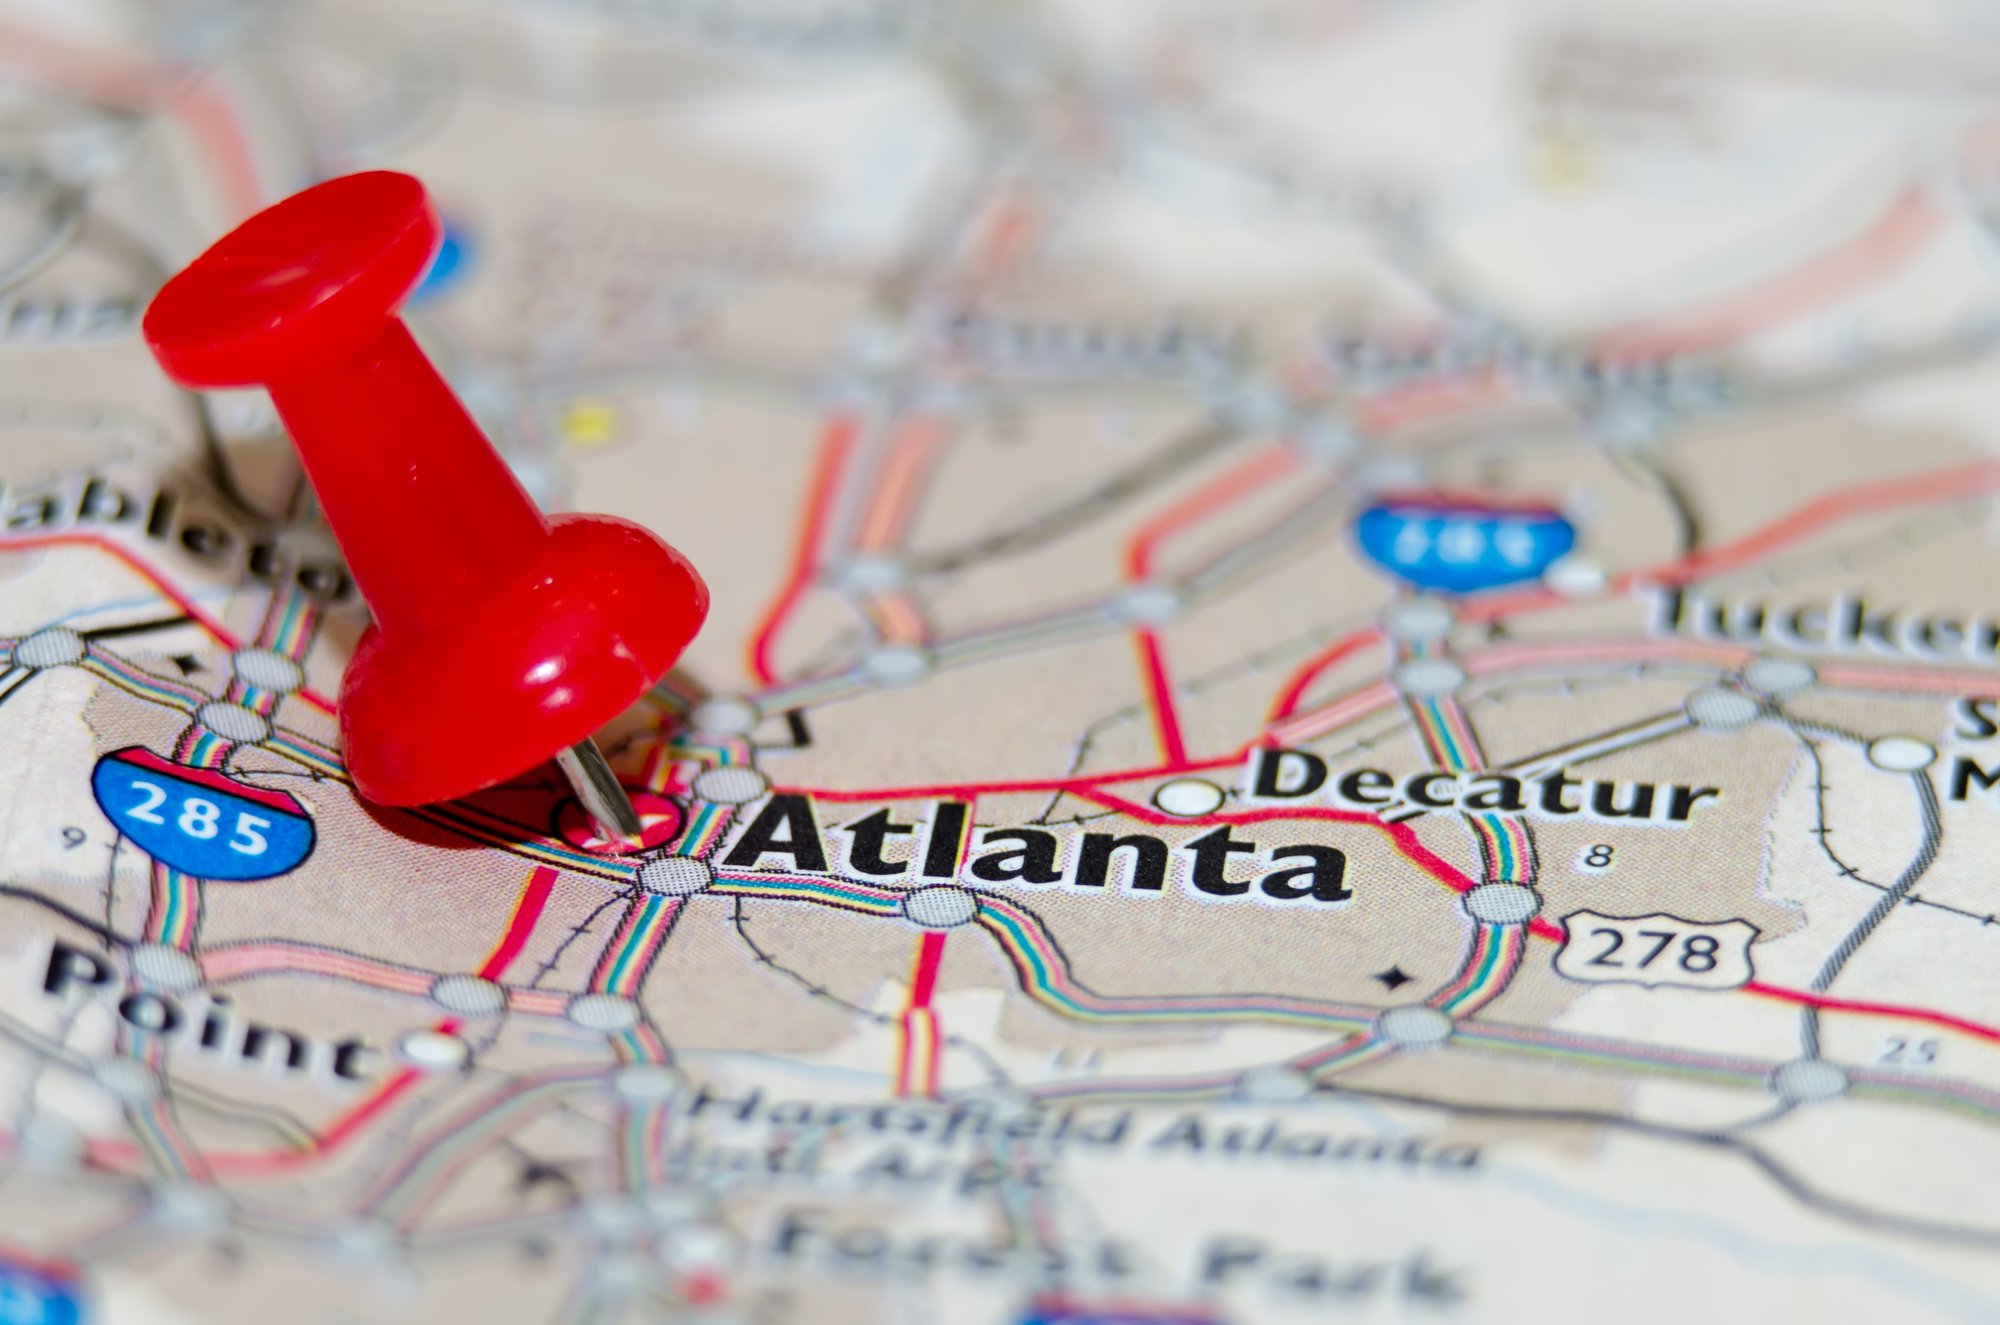 Atlanta georgia city pin on the map